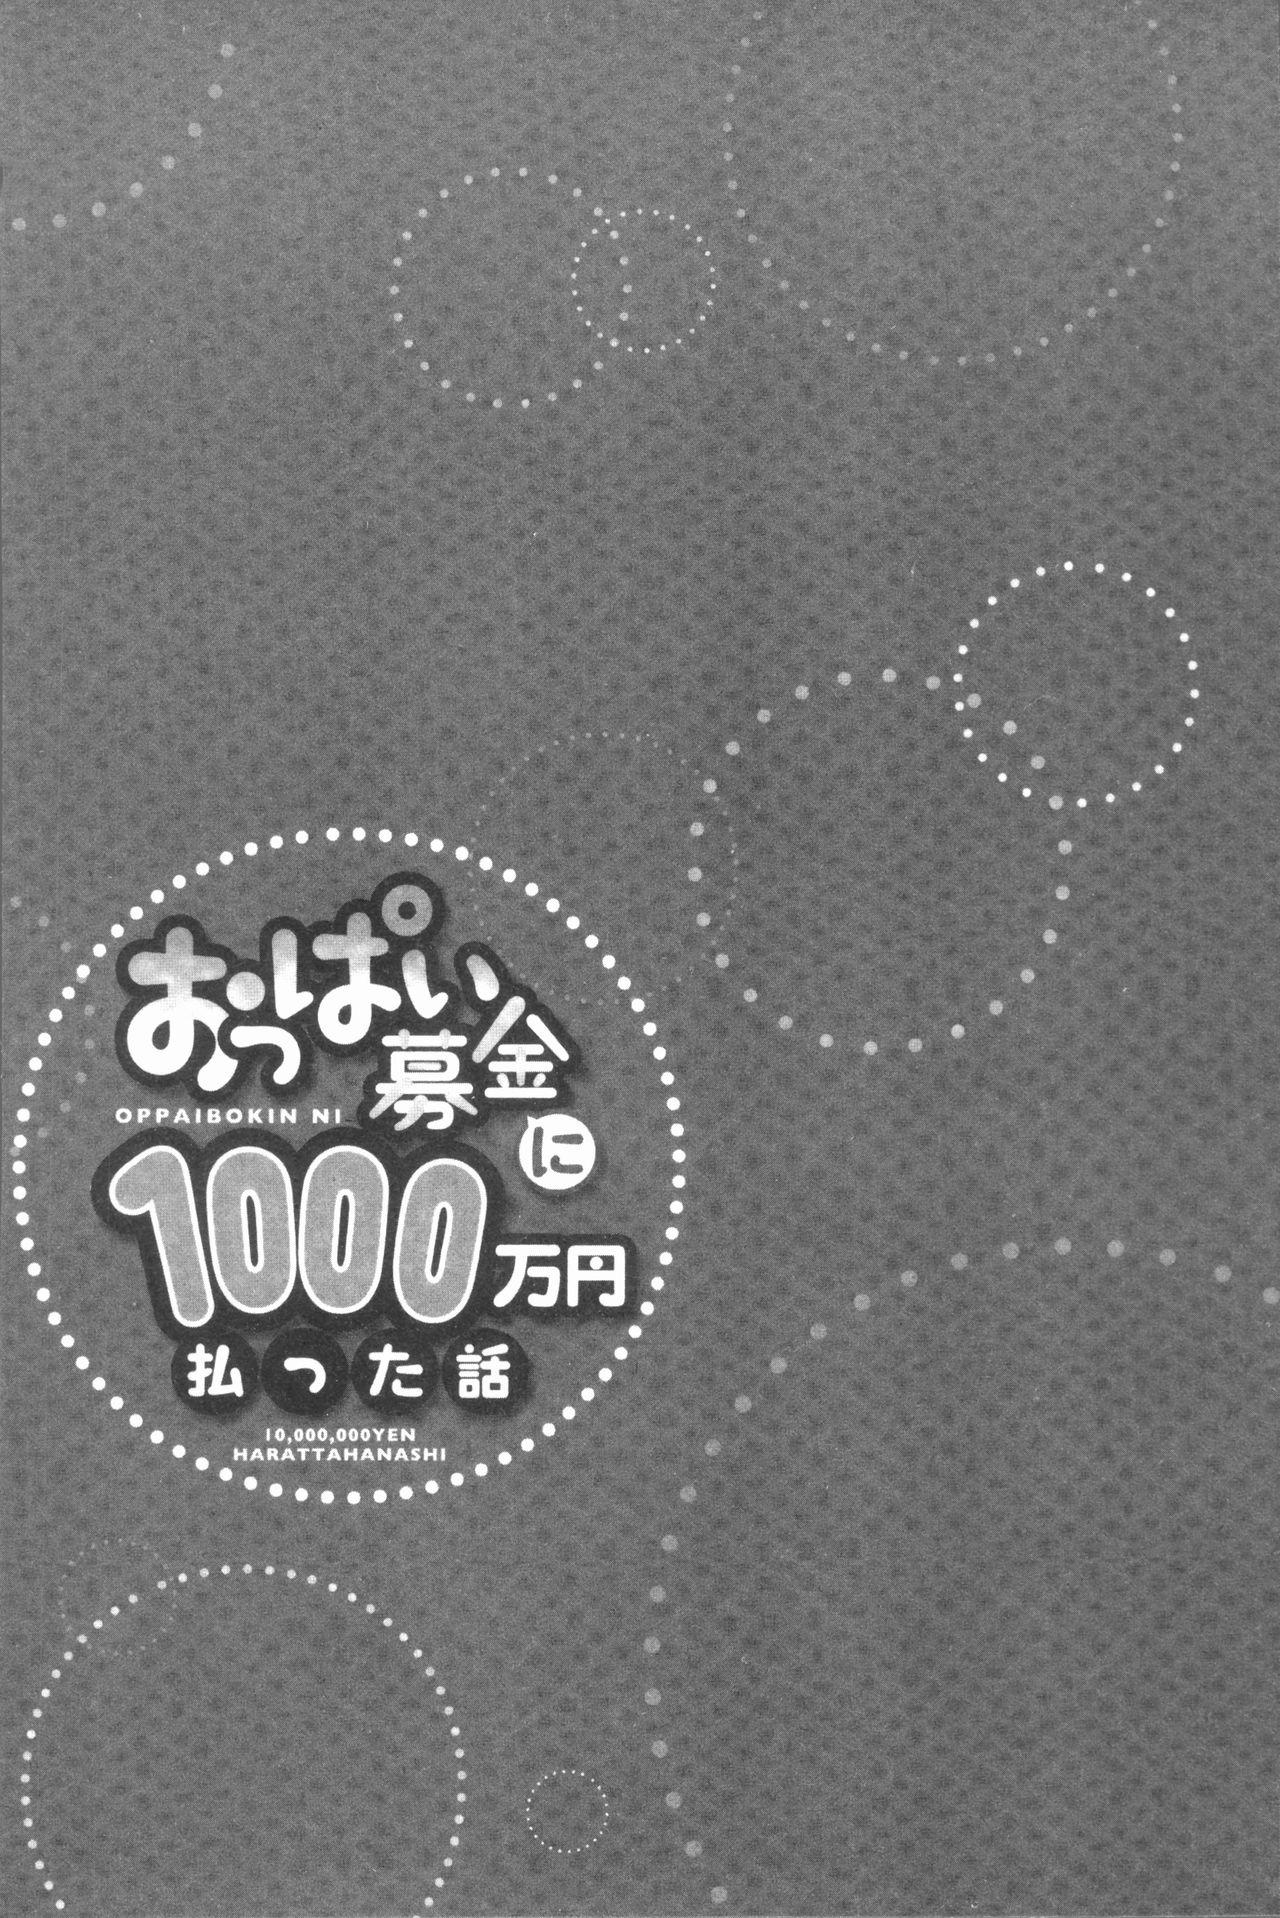 Oppai Bokin ni 1000-man Yen Haratta Hanashi | 柔嫩美乳募款時1000万円都花光光 54